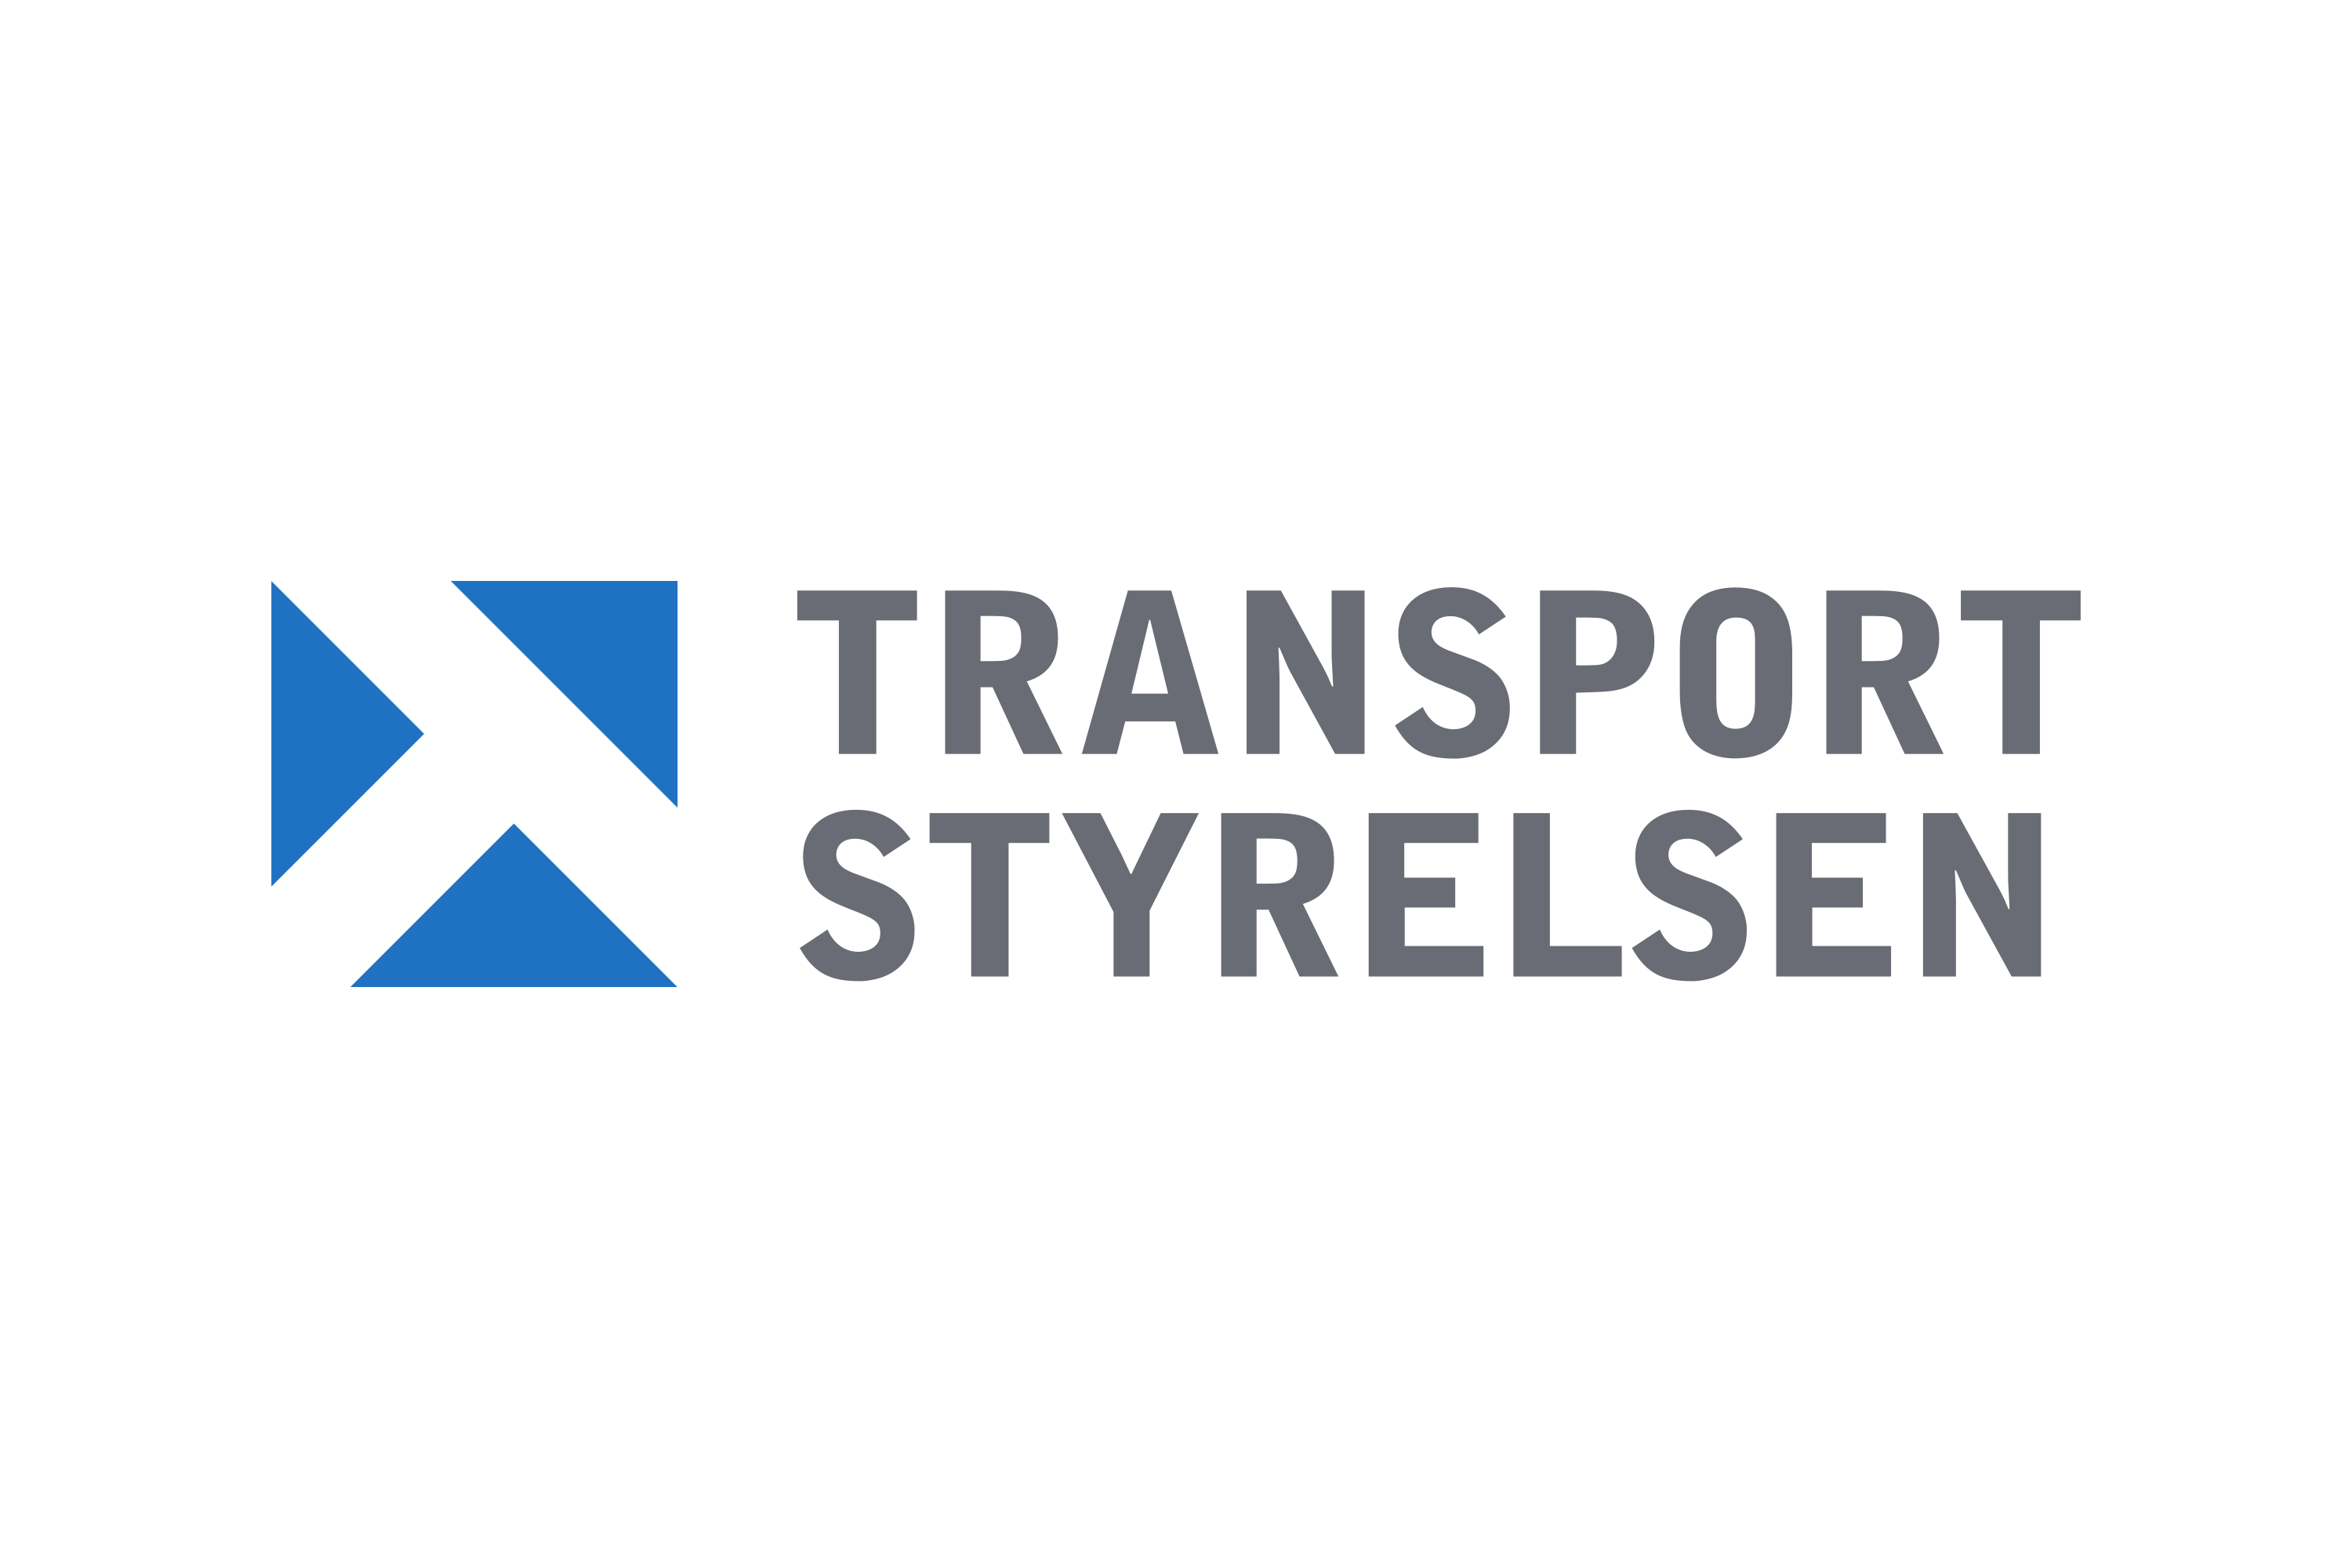 Swedish Transport Agency Logo